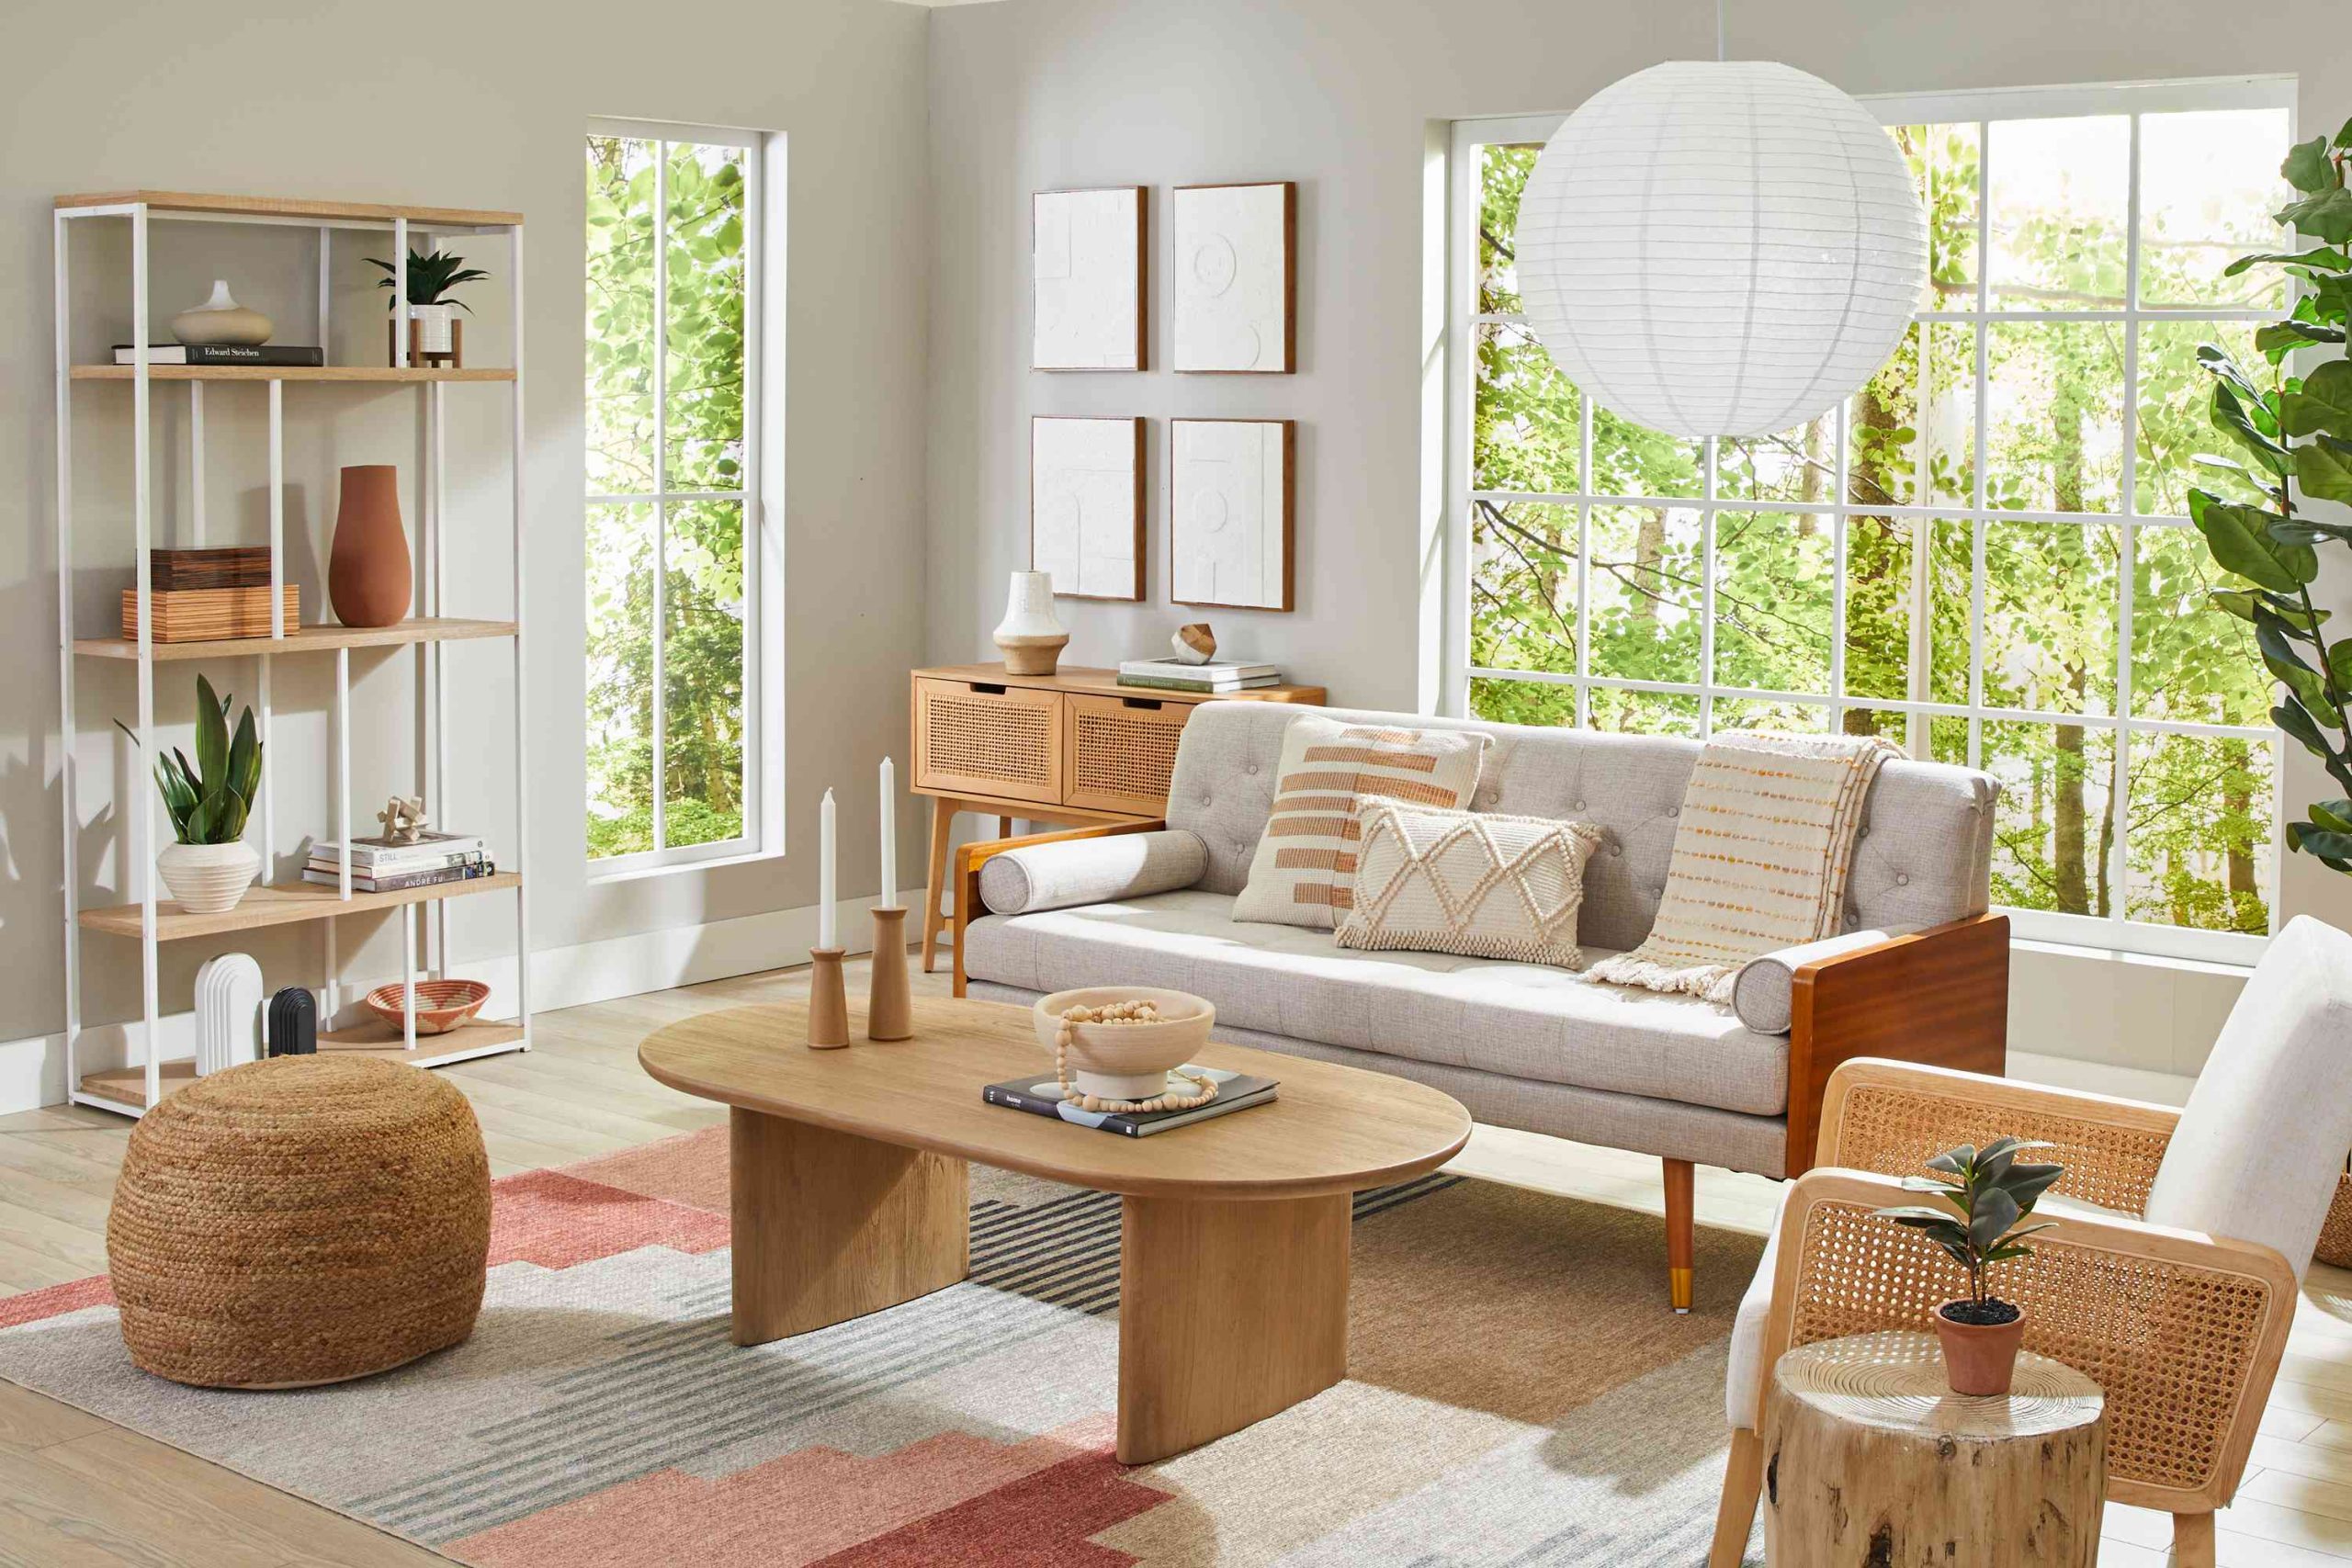 Minimalist home decor ideas for living room